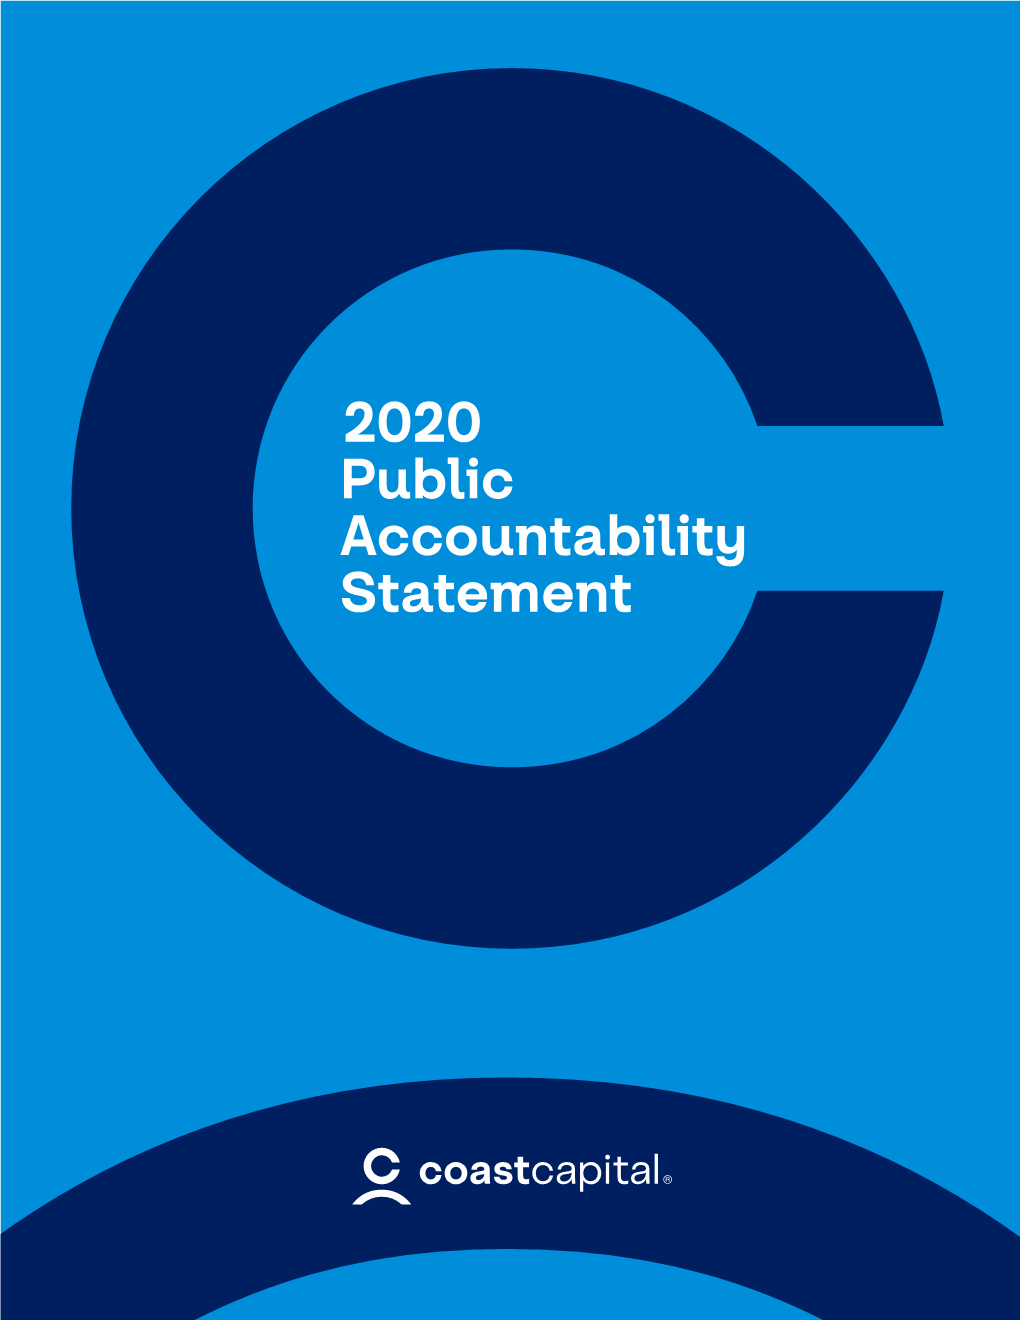 2020 Public Accountability Statement Contents